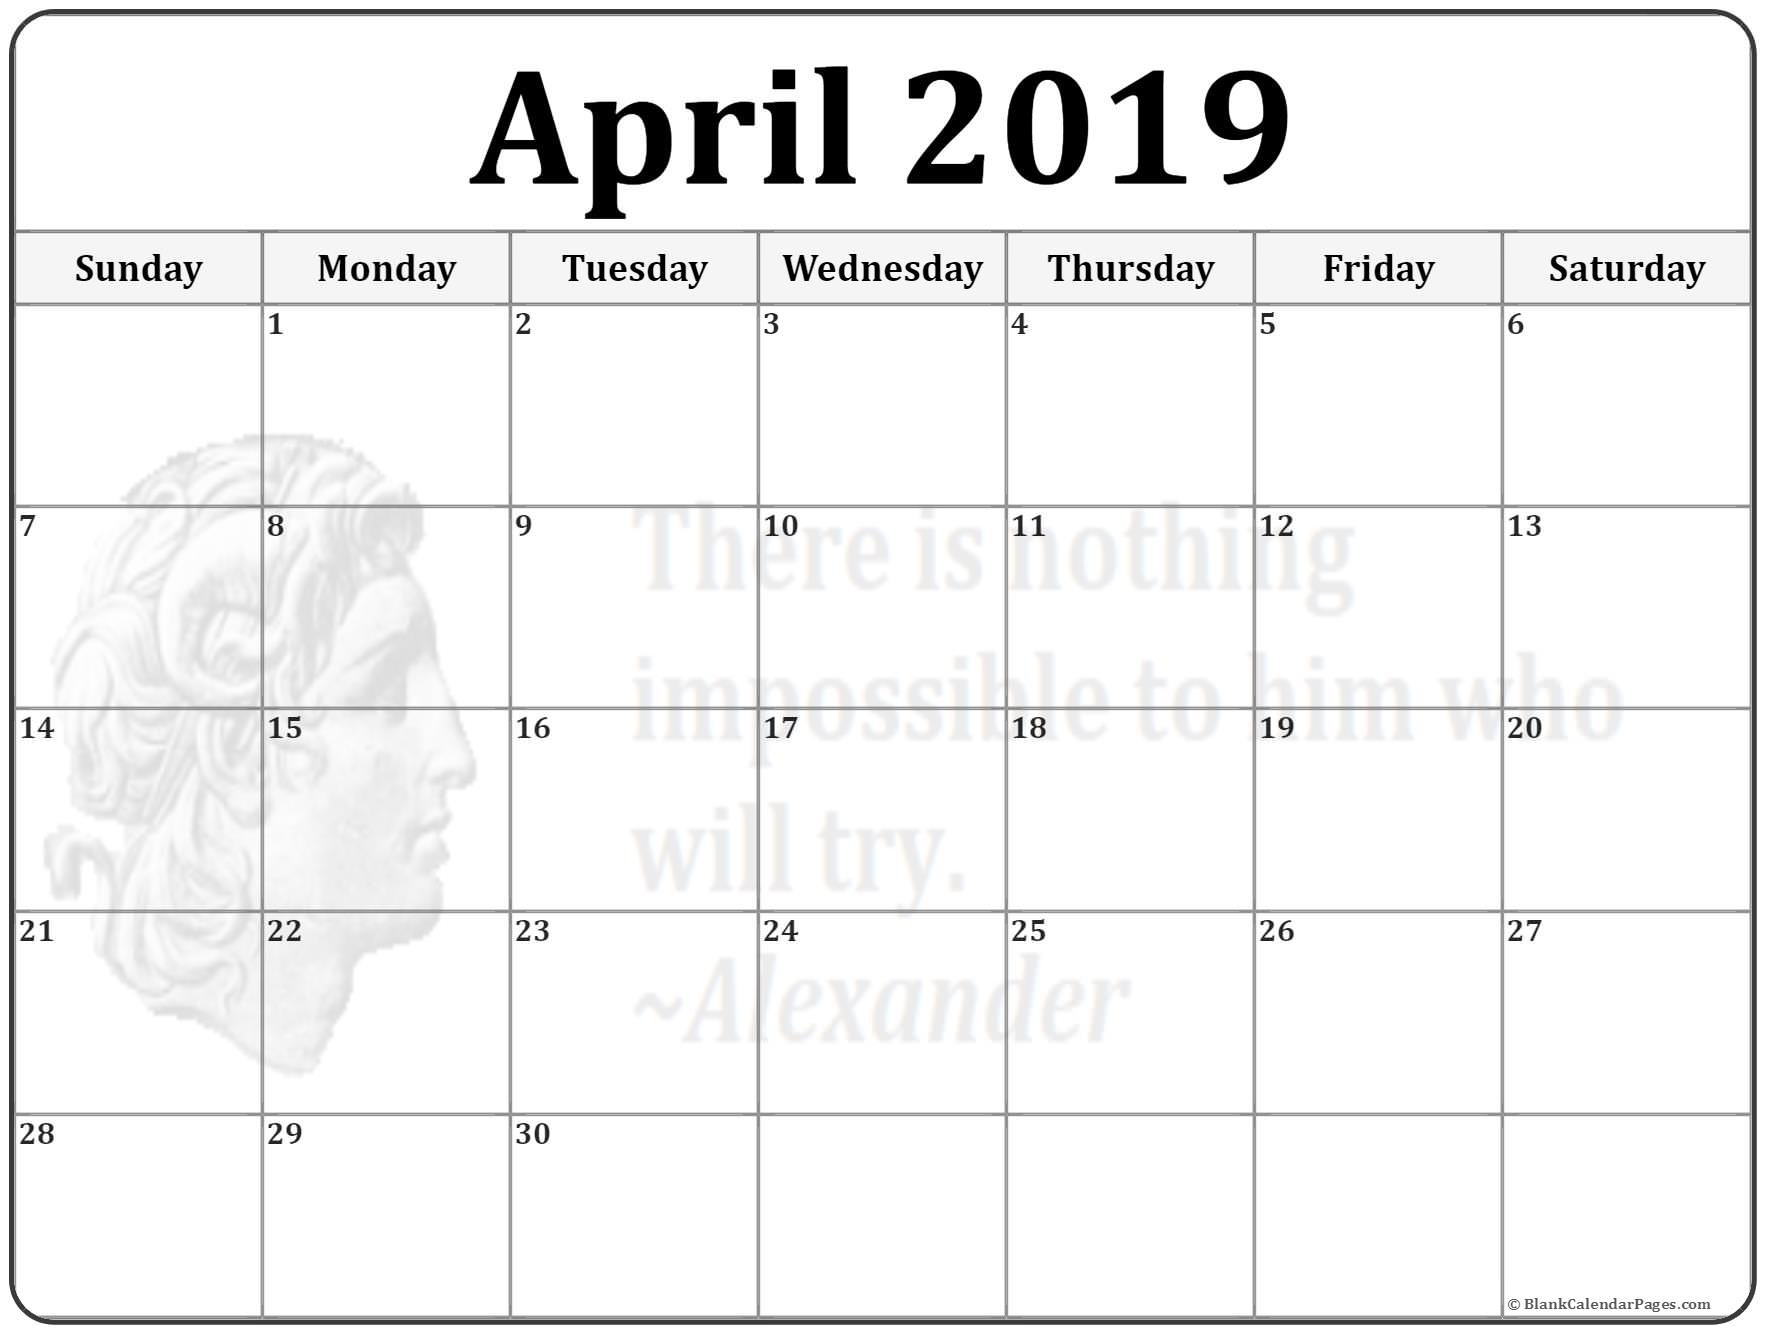 April 2019 calendar